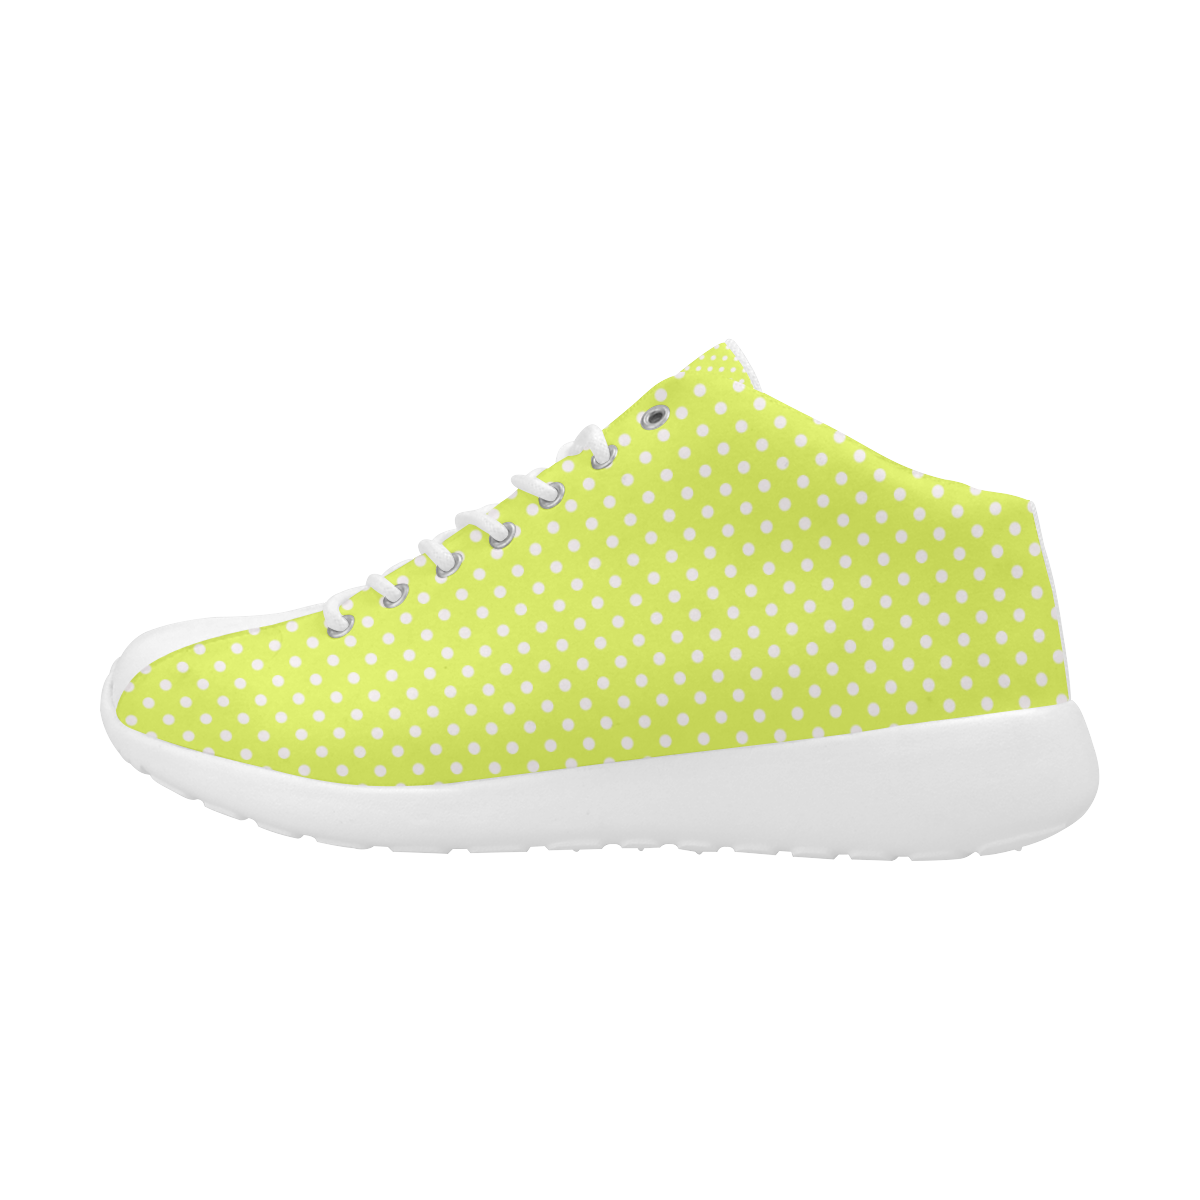 Yellow polka dots Women's Basketball Training Shoes (Model 47502)